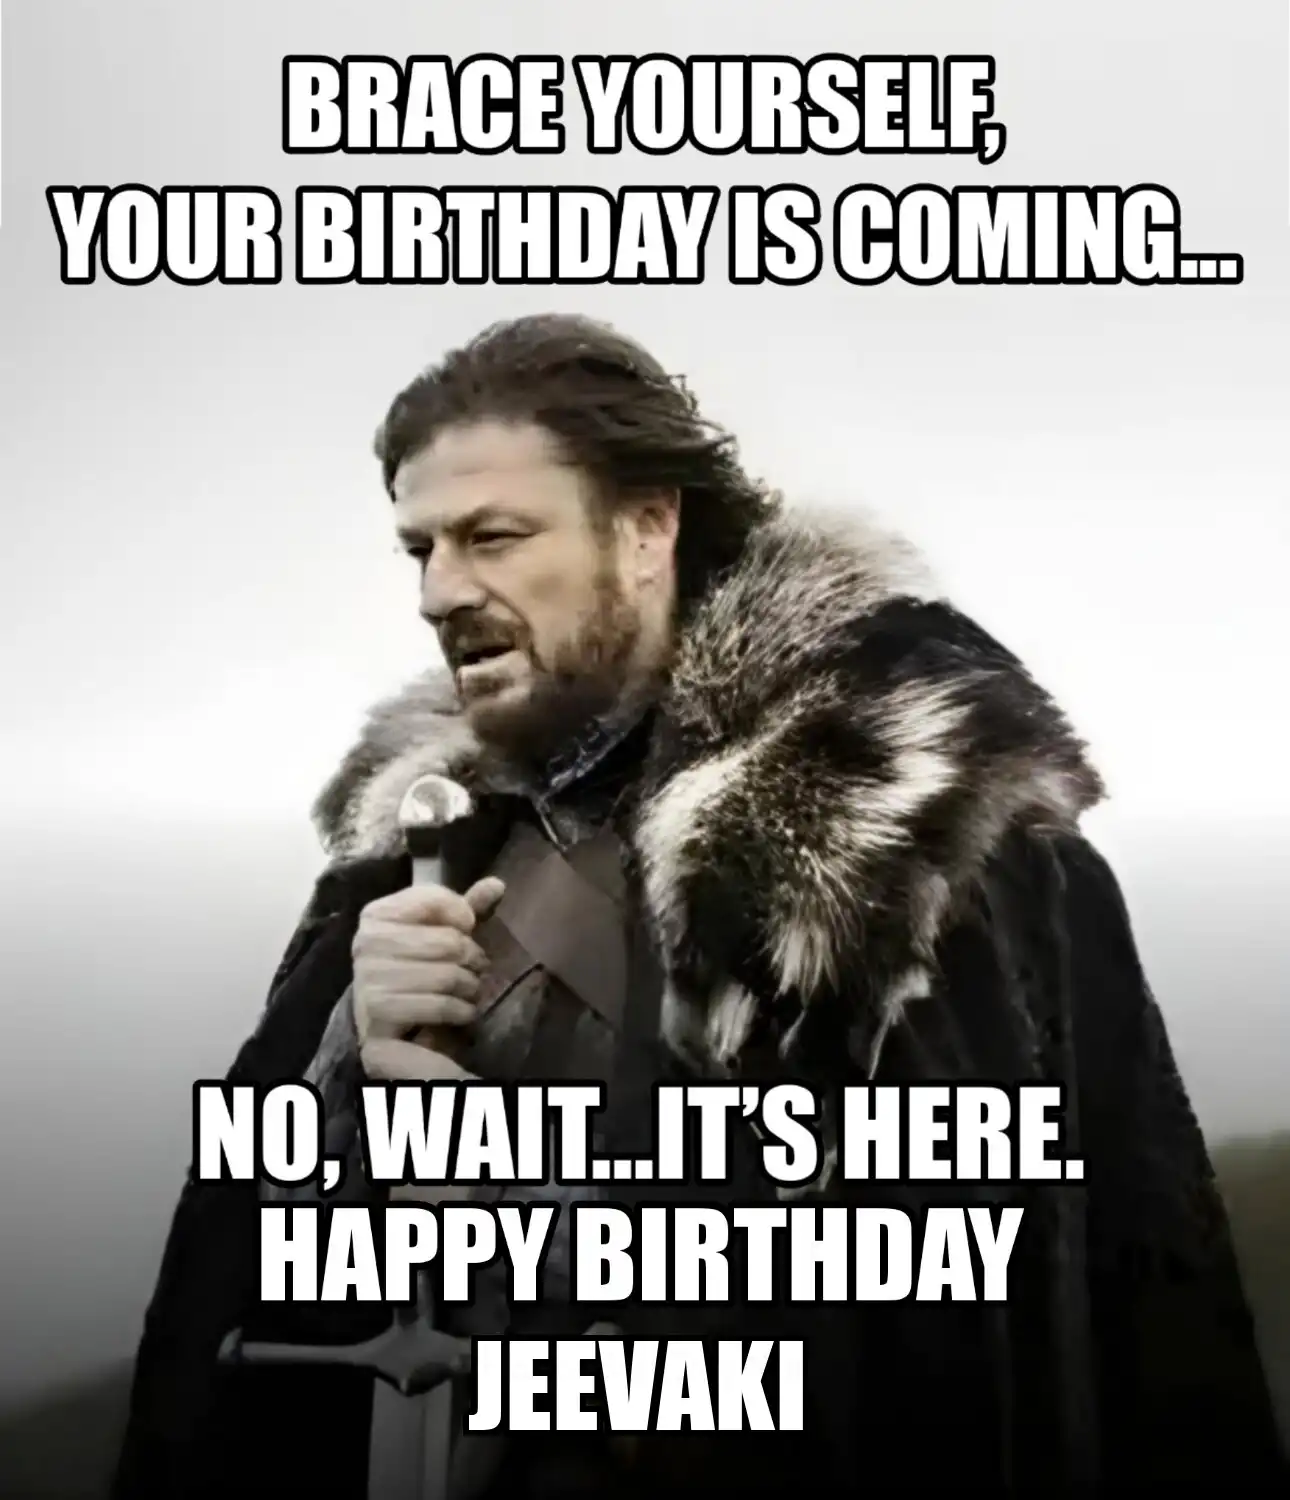 Happy Birthday Jeevaki Brace Yourself Your Birthday Is Coming Meme